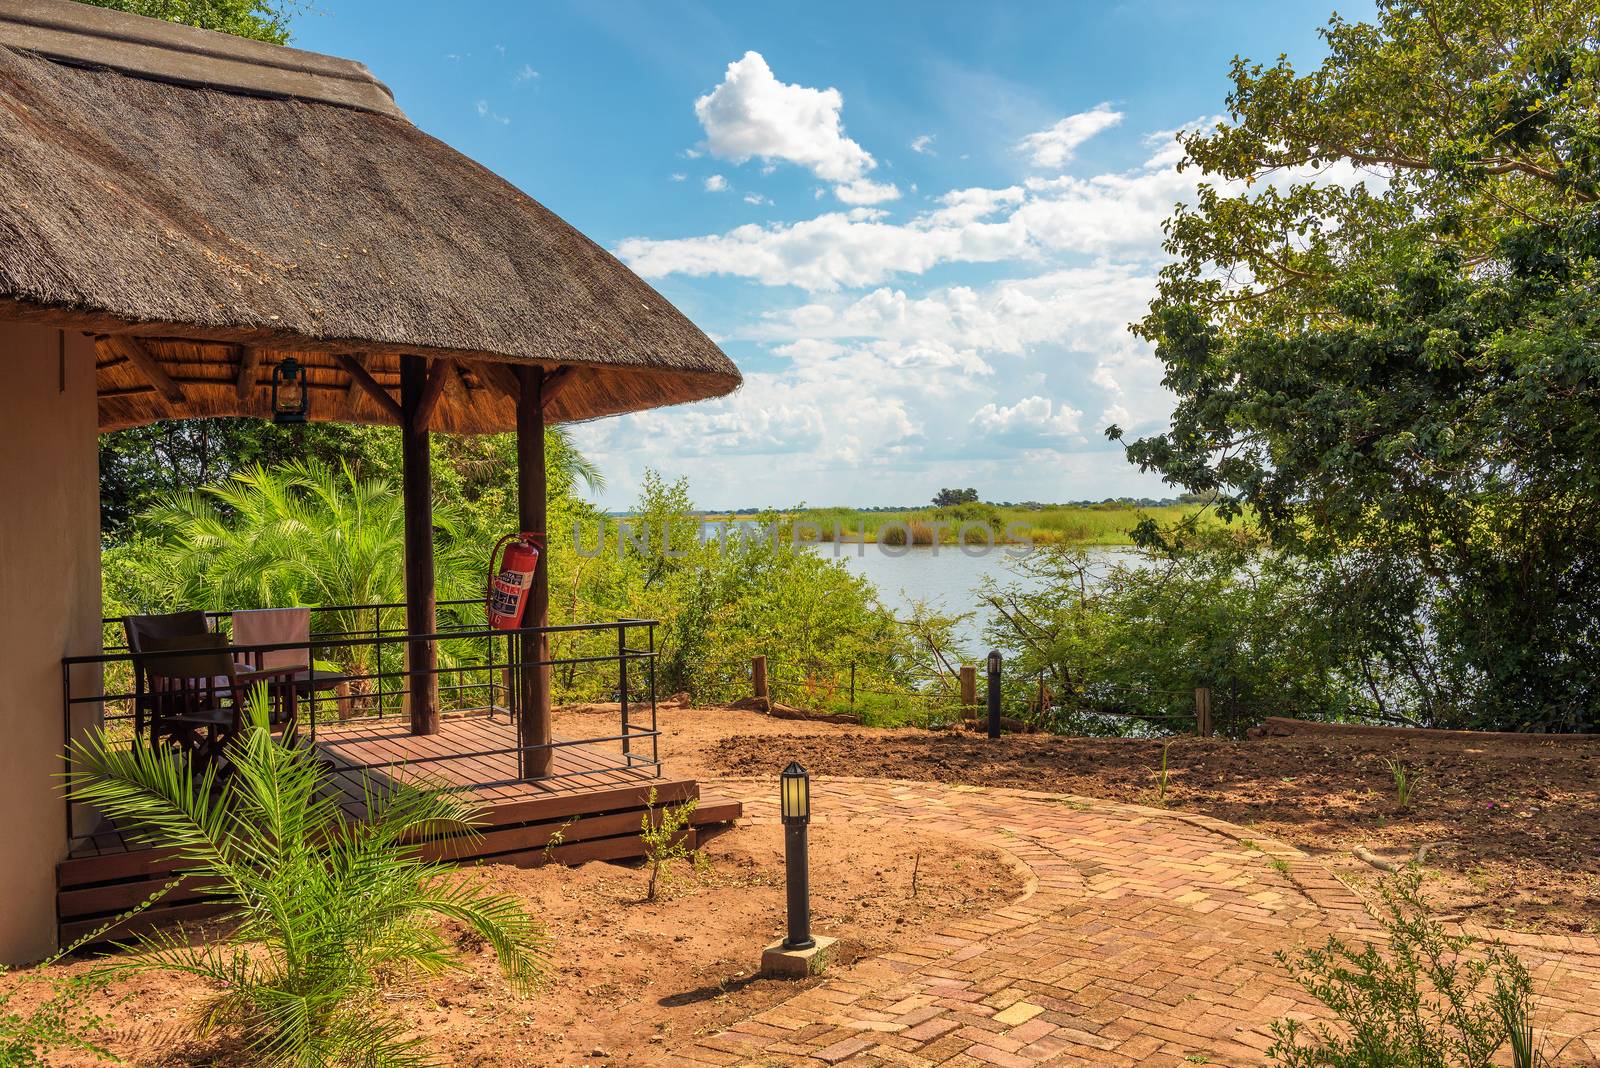 Chalet in the Chobe Safari Lodge located at the Chobe River in Kasane, Botswana by nickfox